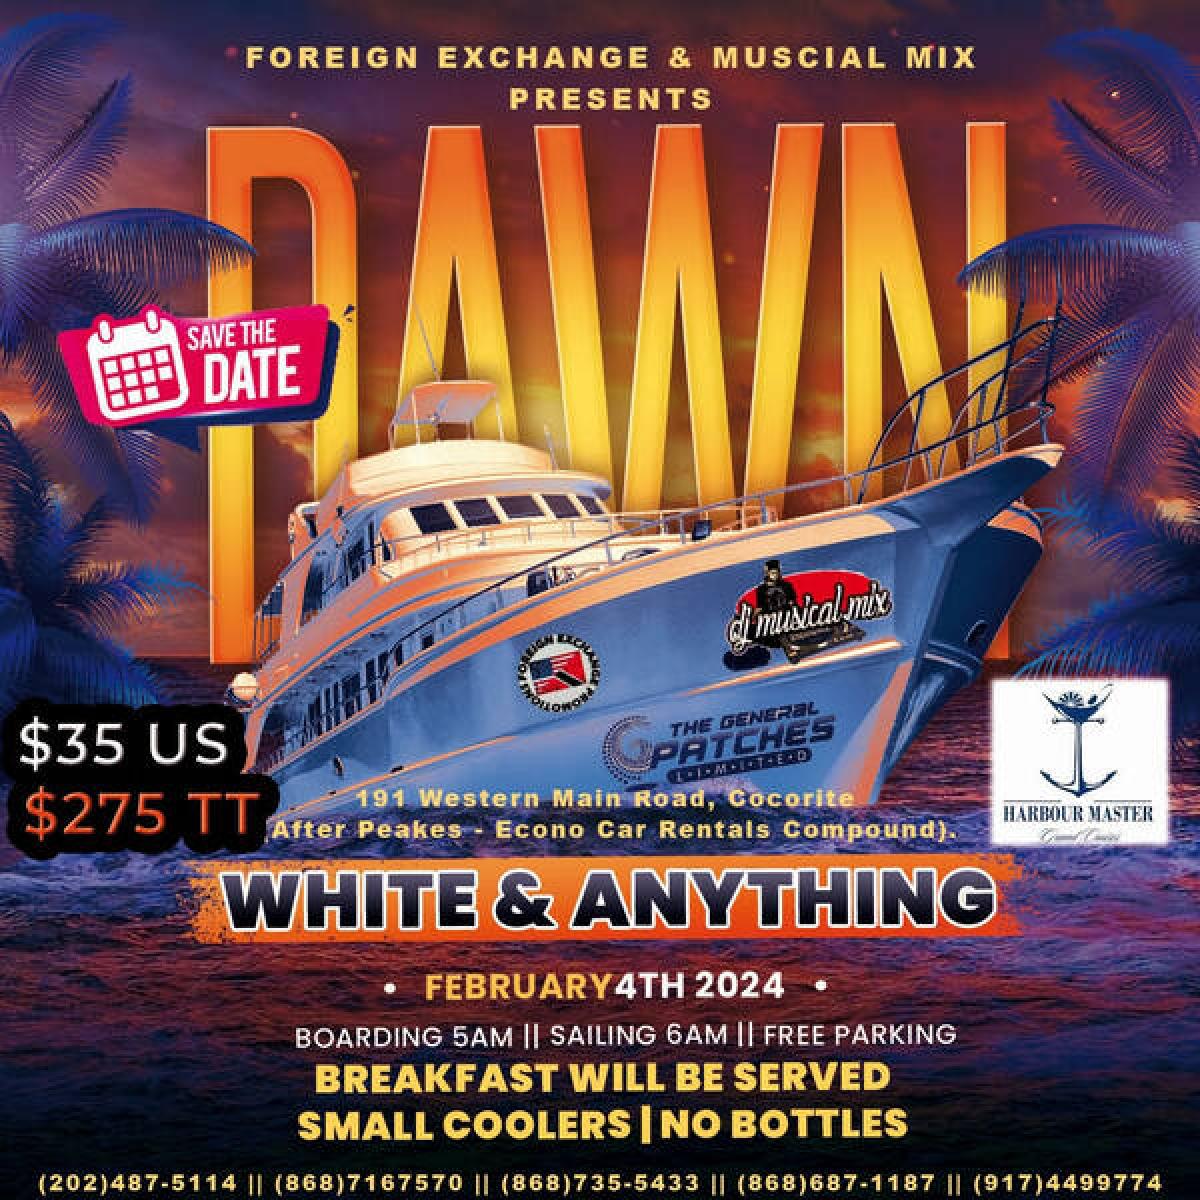 Dawn (D Boatride) flyer or graphic.